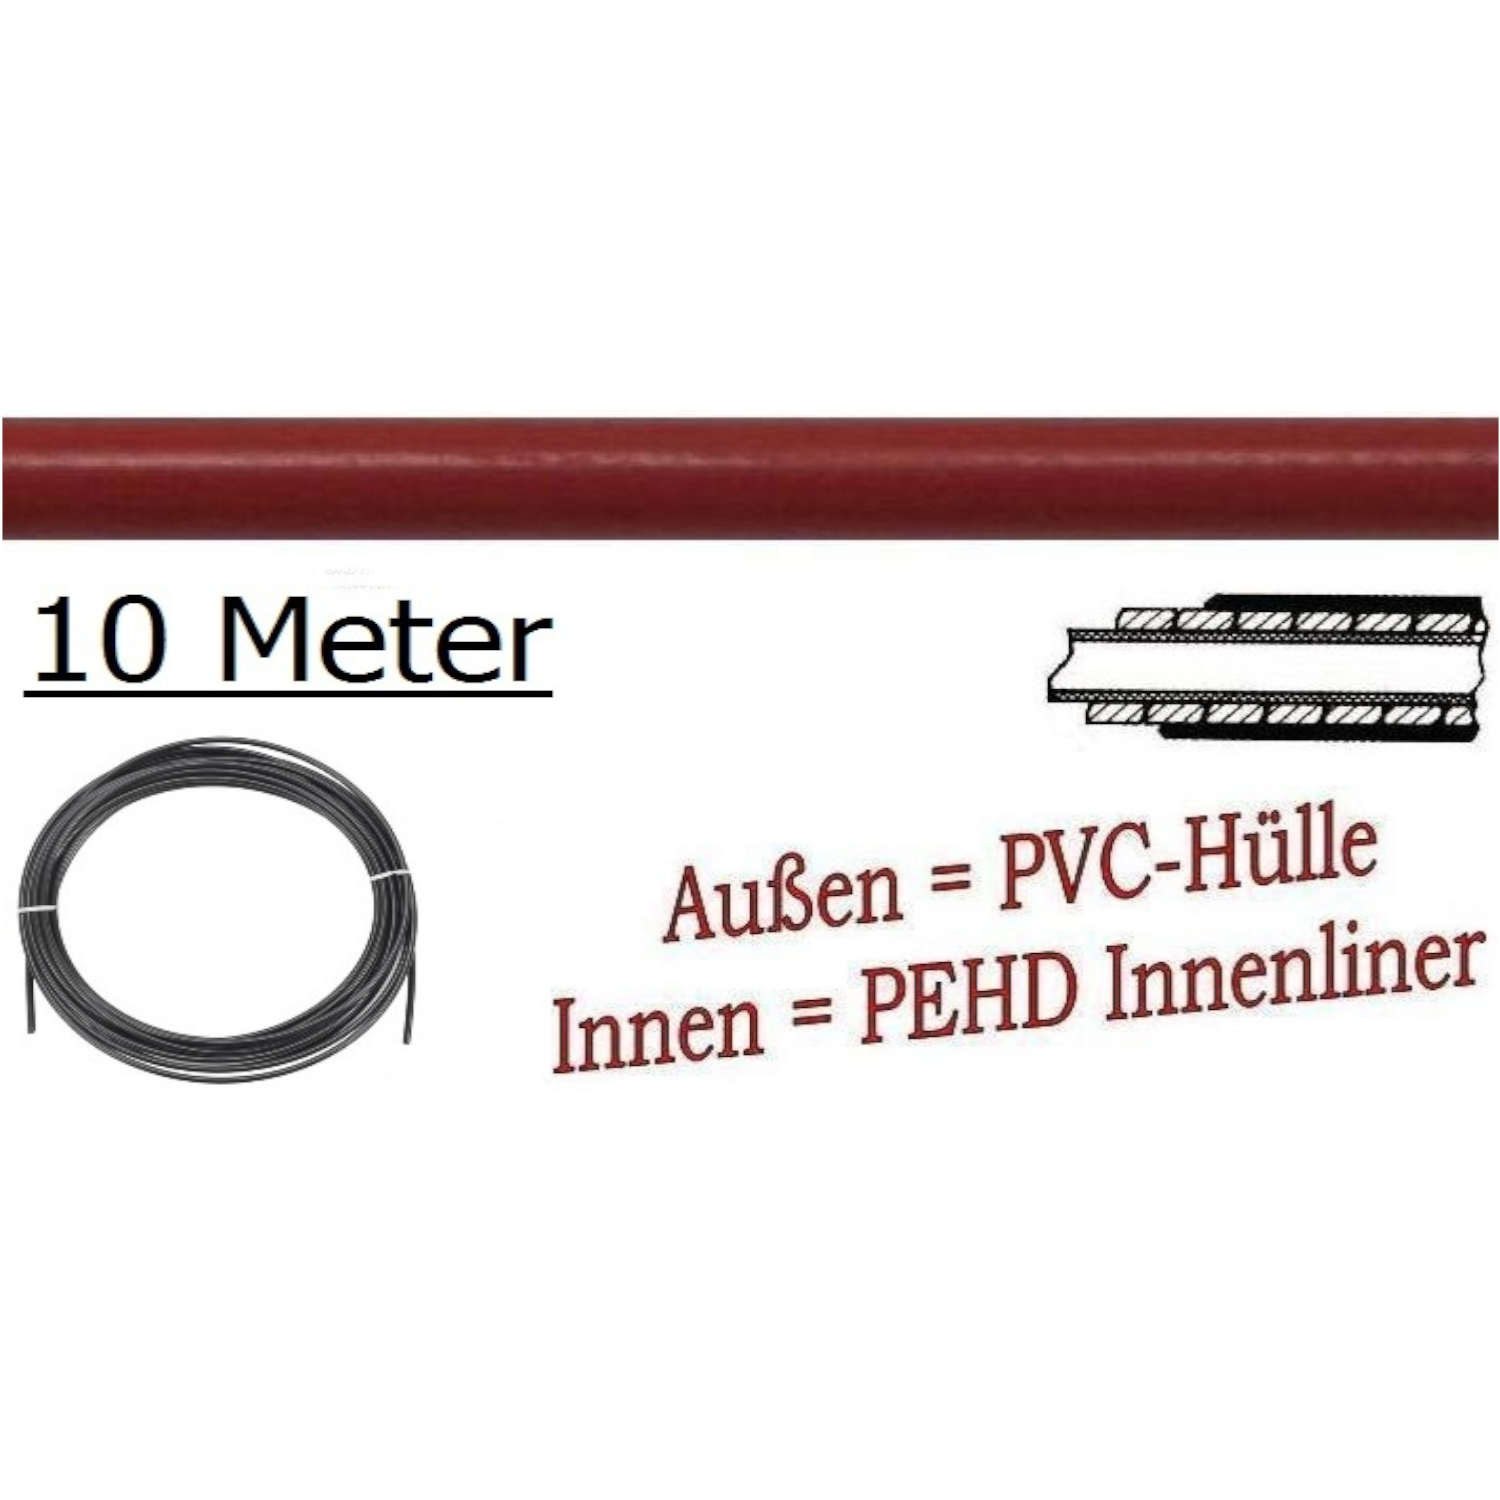 BREMS-Hülle 10 m-Rolle-DT11250010 in braun, mit PE-HD-Innenliner